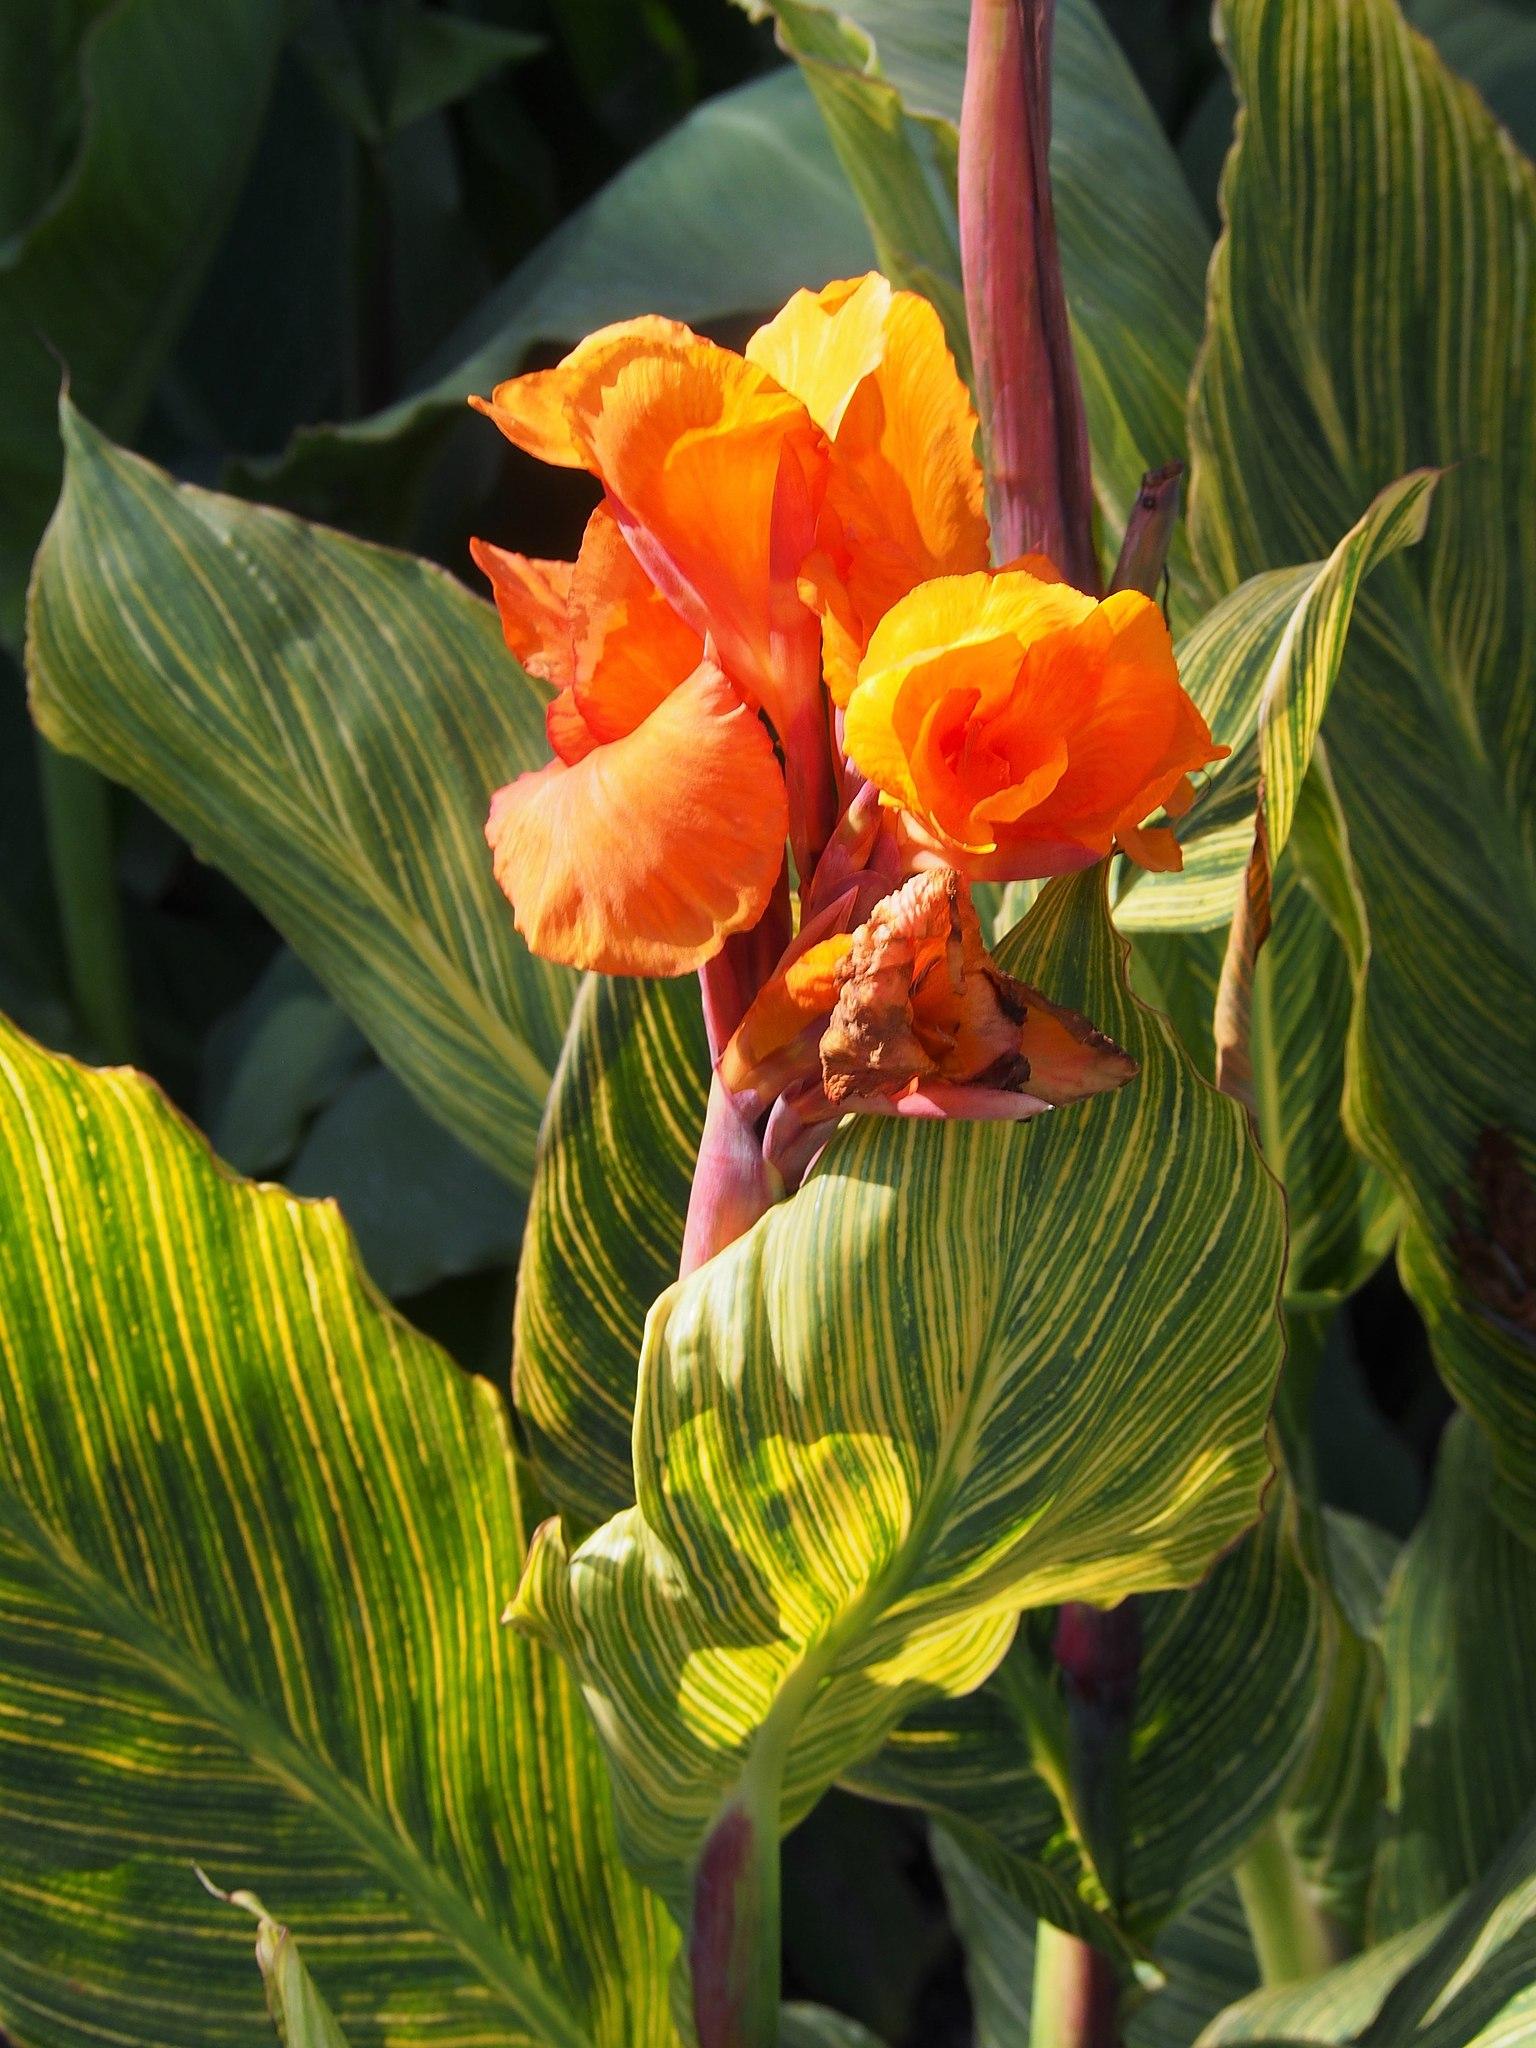 Orange flower with burgendy stems, yellow-green leaves.